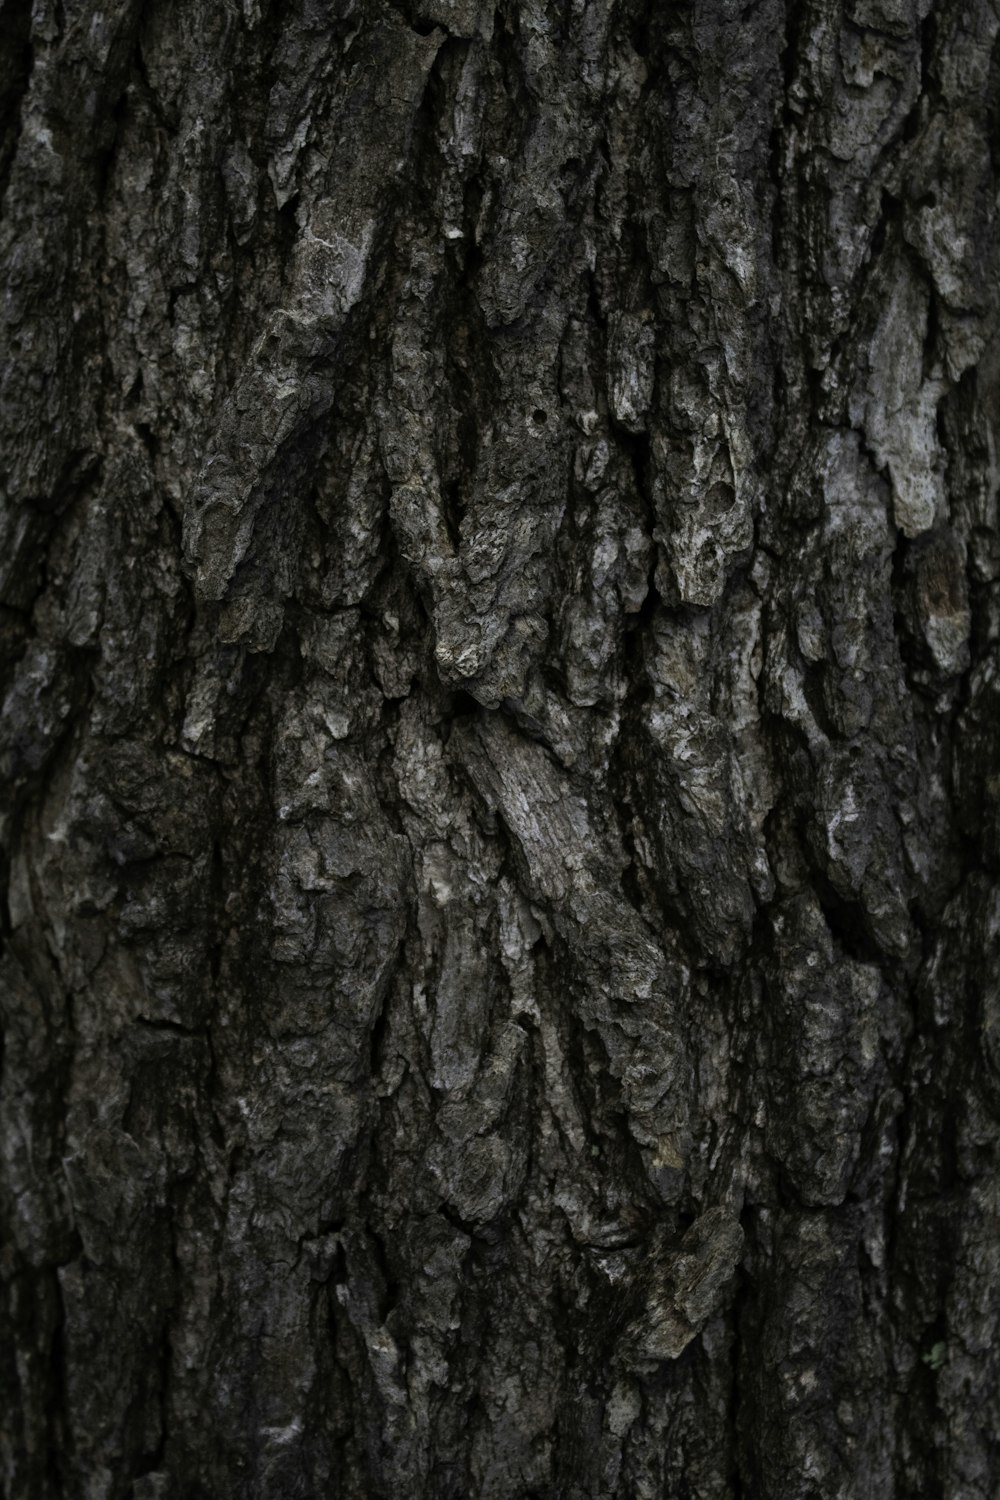 close up photo of tree